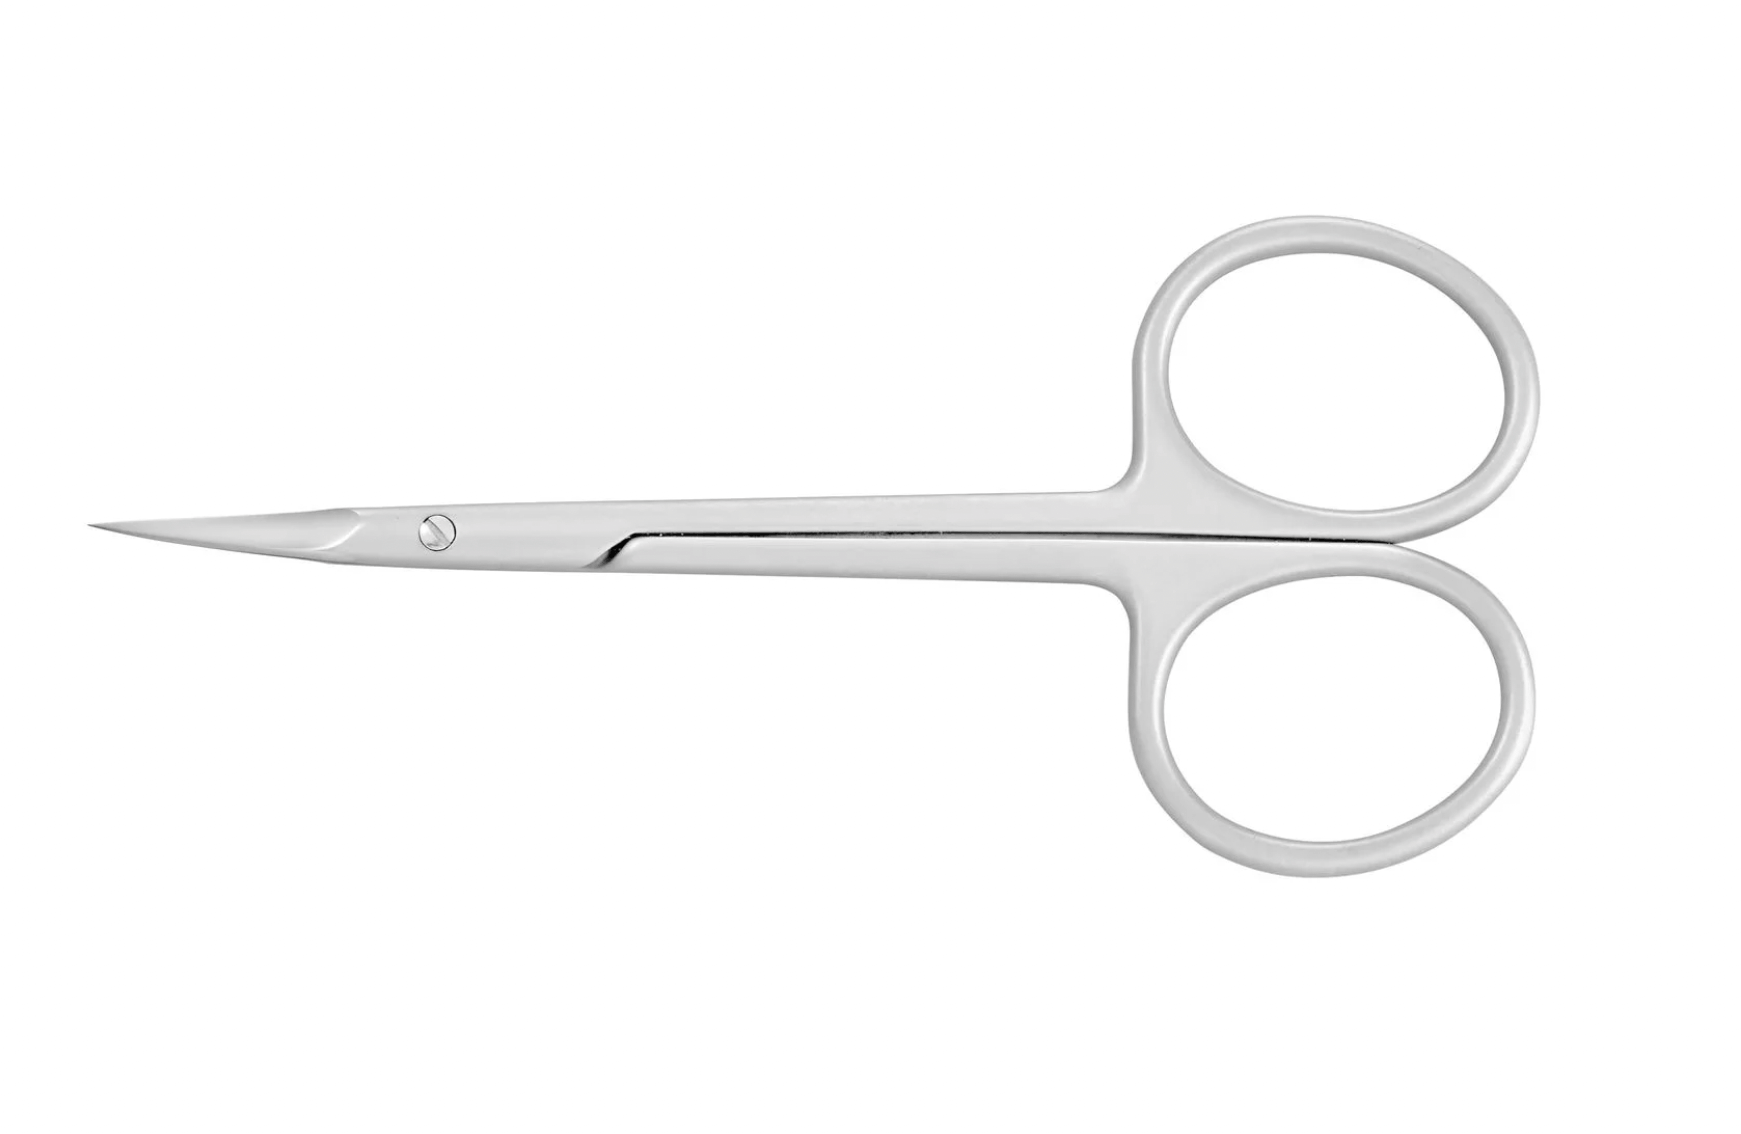 Nippon Nippers Cuticle Scissors - Model S-02W